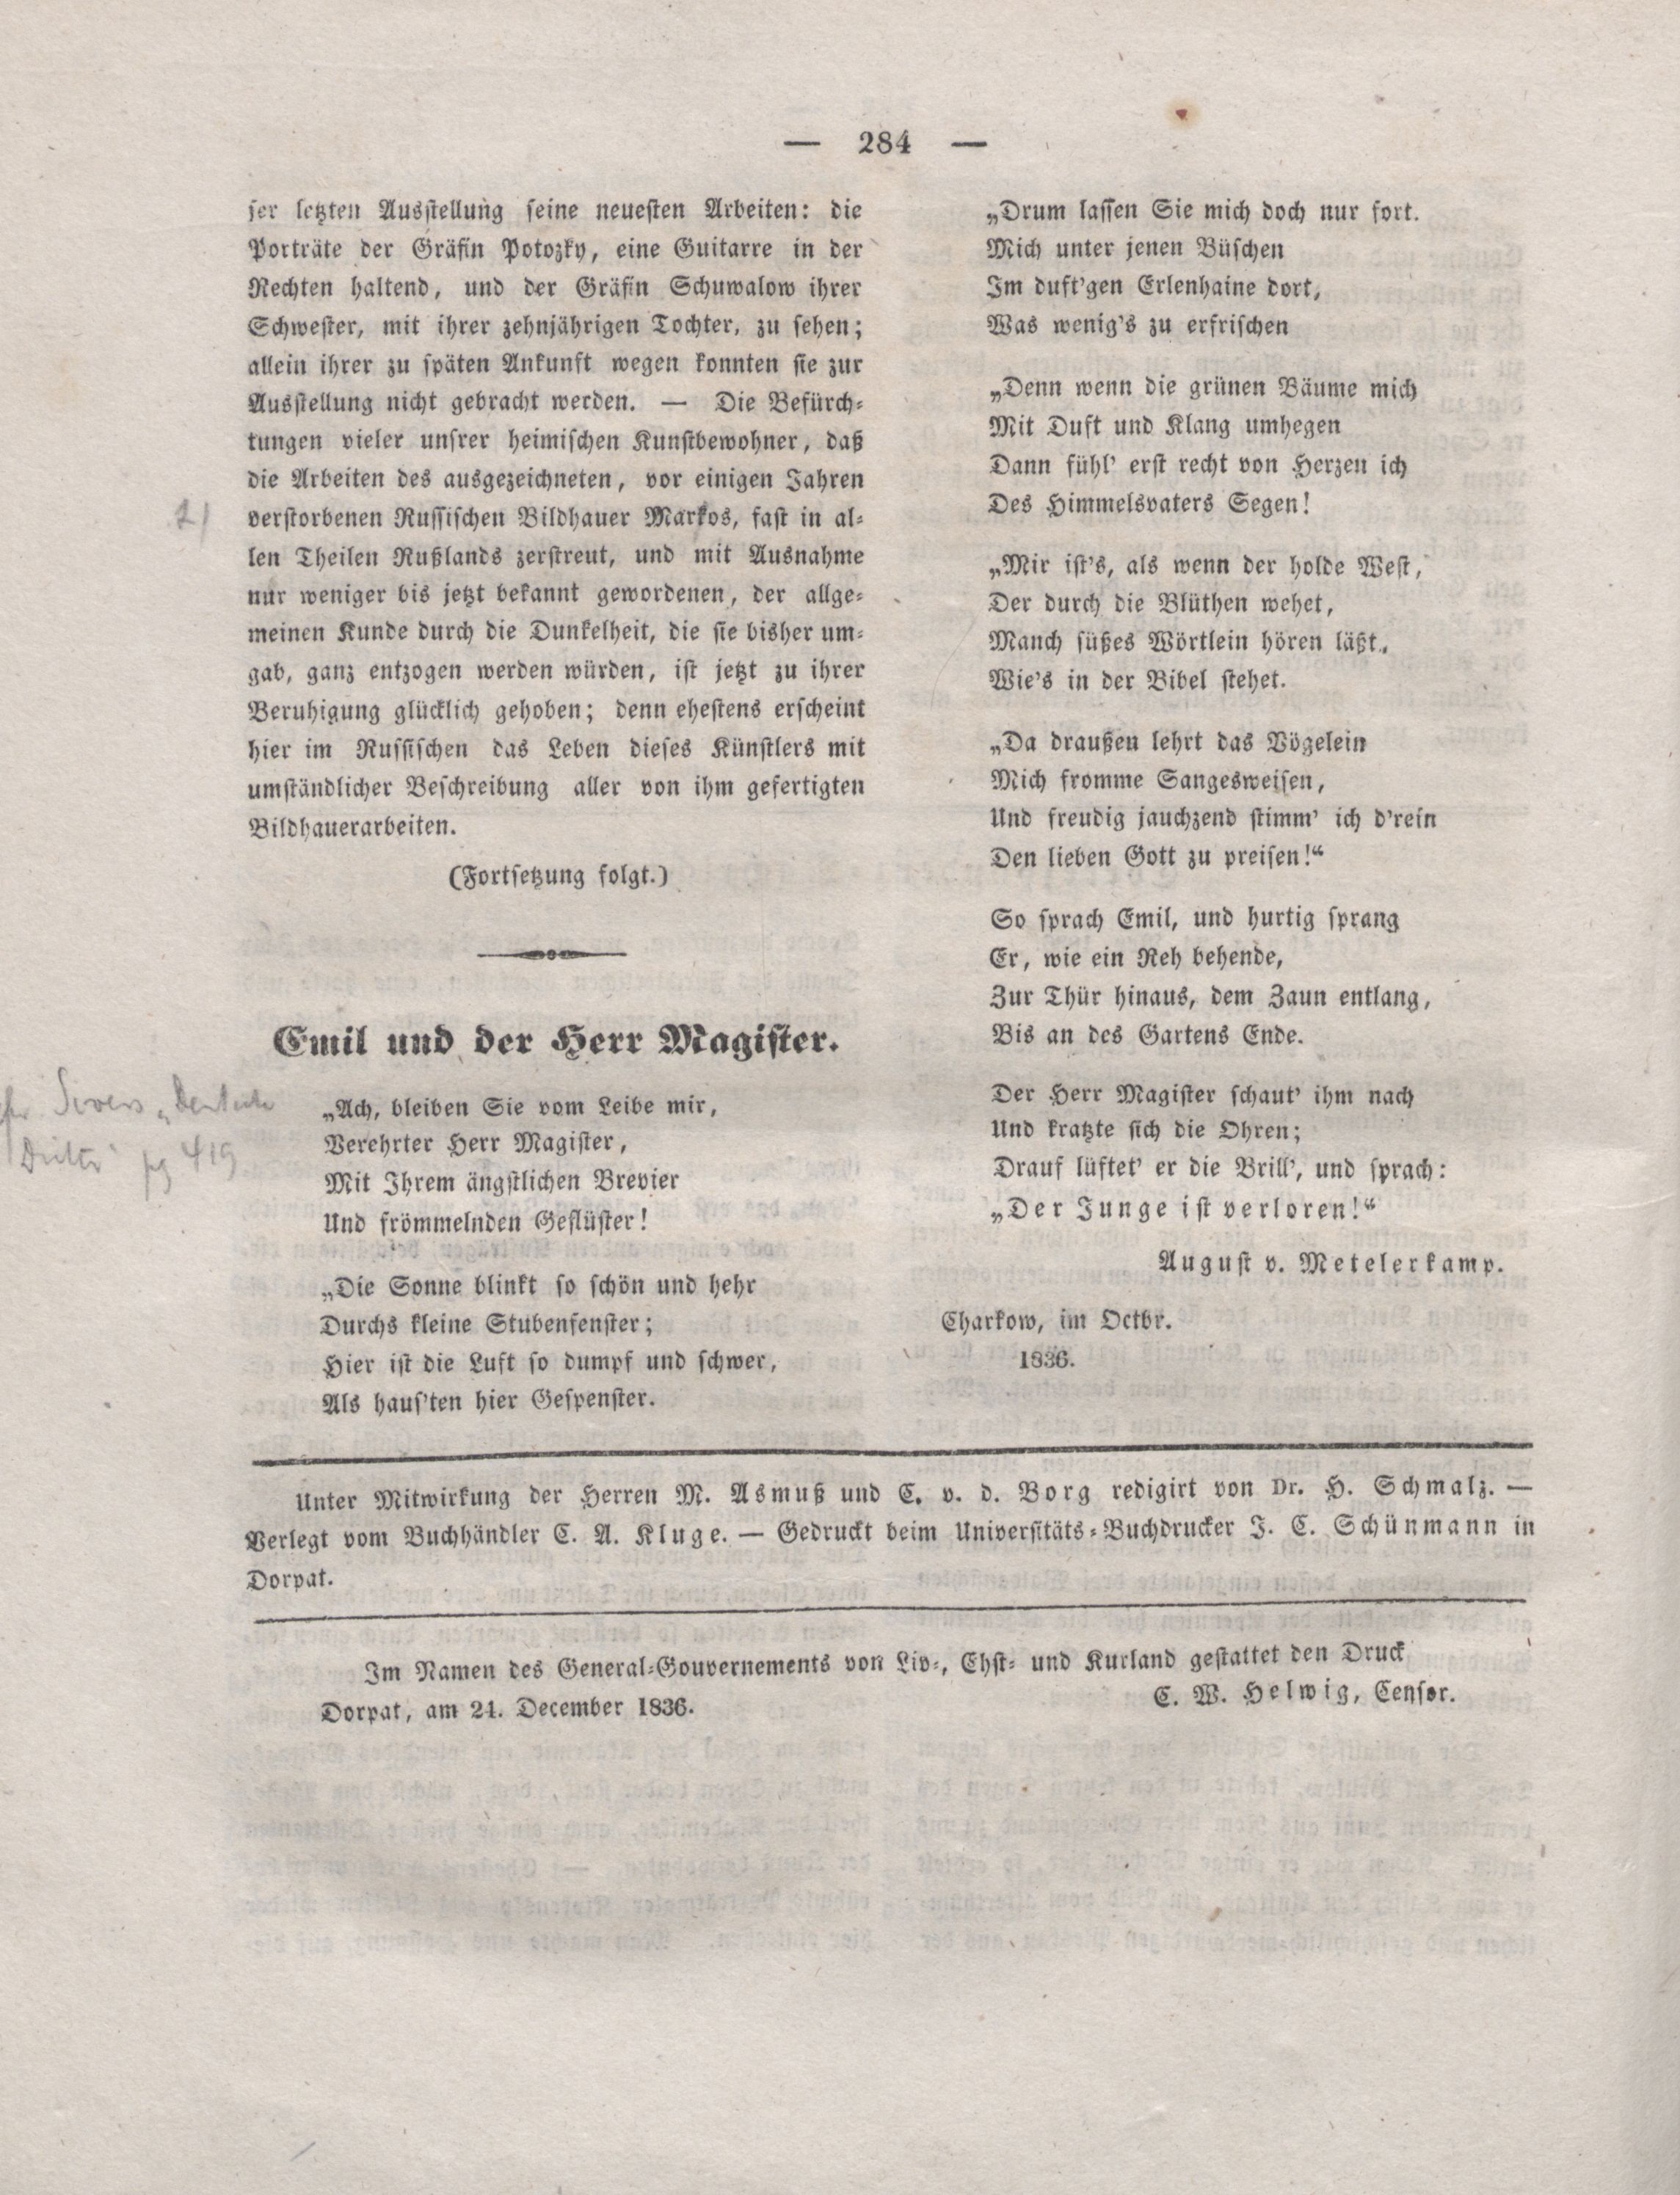 Emil und der Herr Magister (1836) | 1. (284) Основной текст